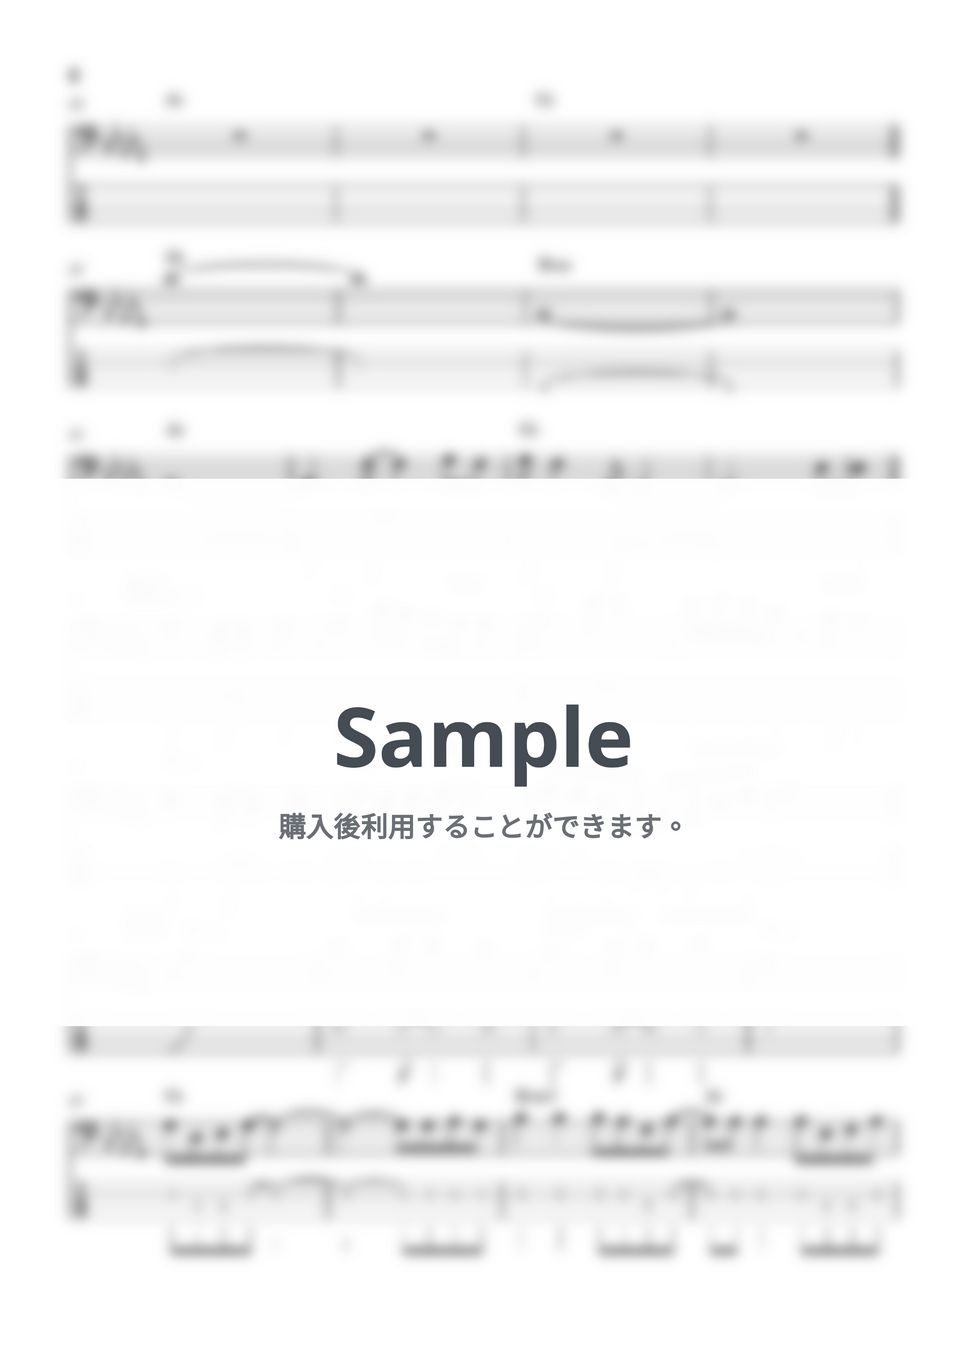 BUMP OF CHICKEN - 天体観測 (ドラマ『天体観測』挿入歌ベース譜) by Kodai Hojo